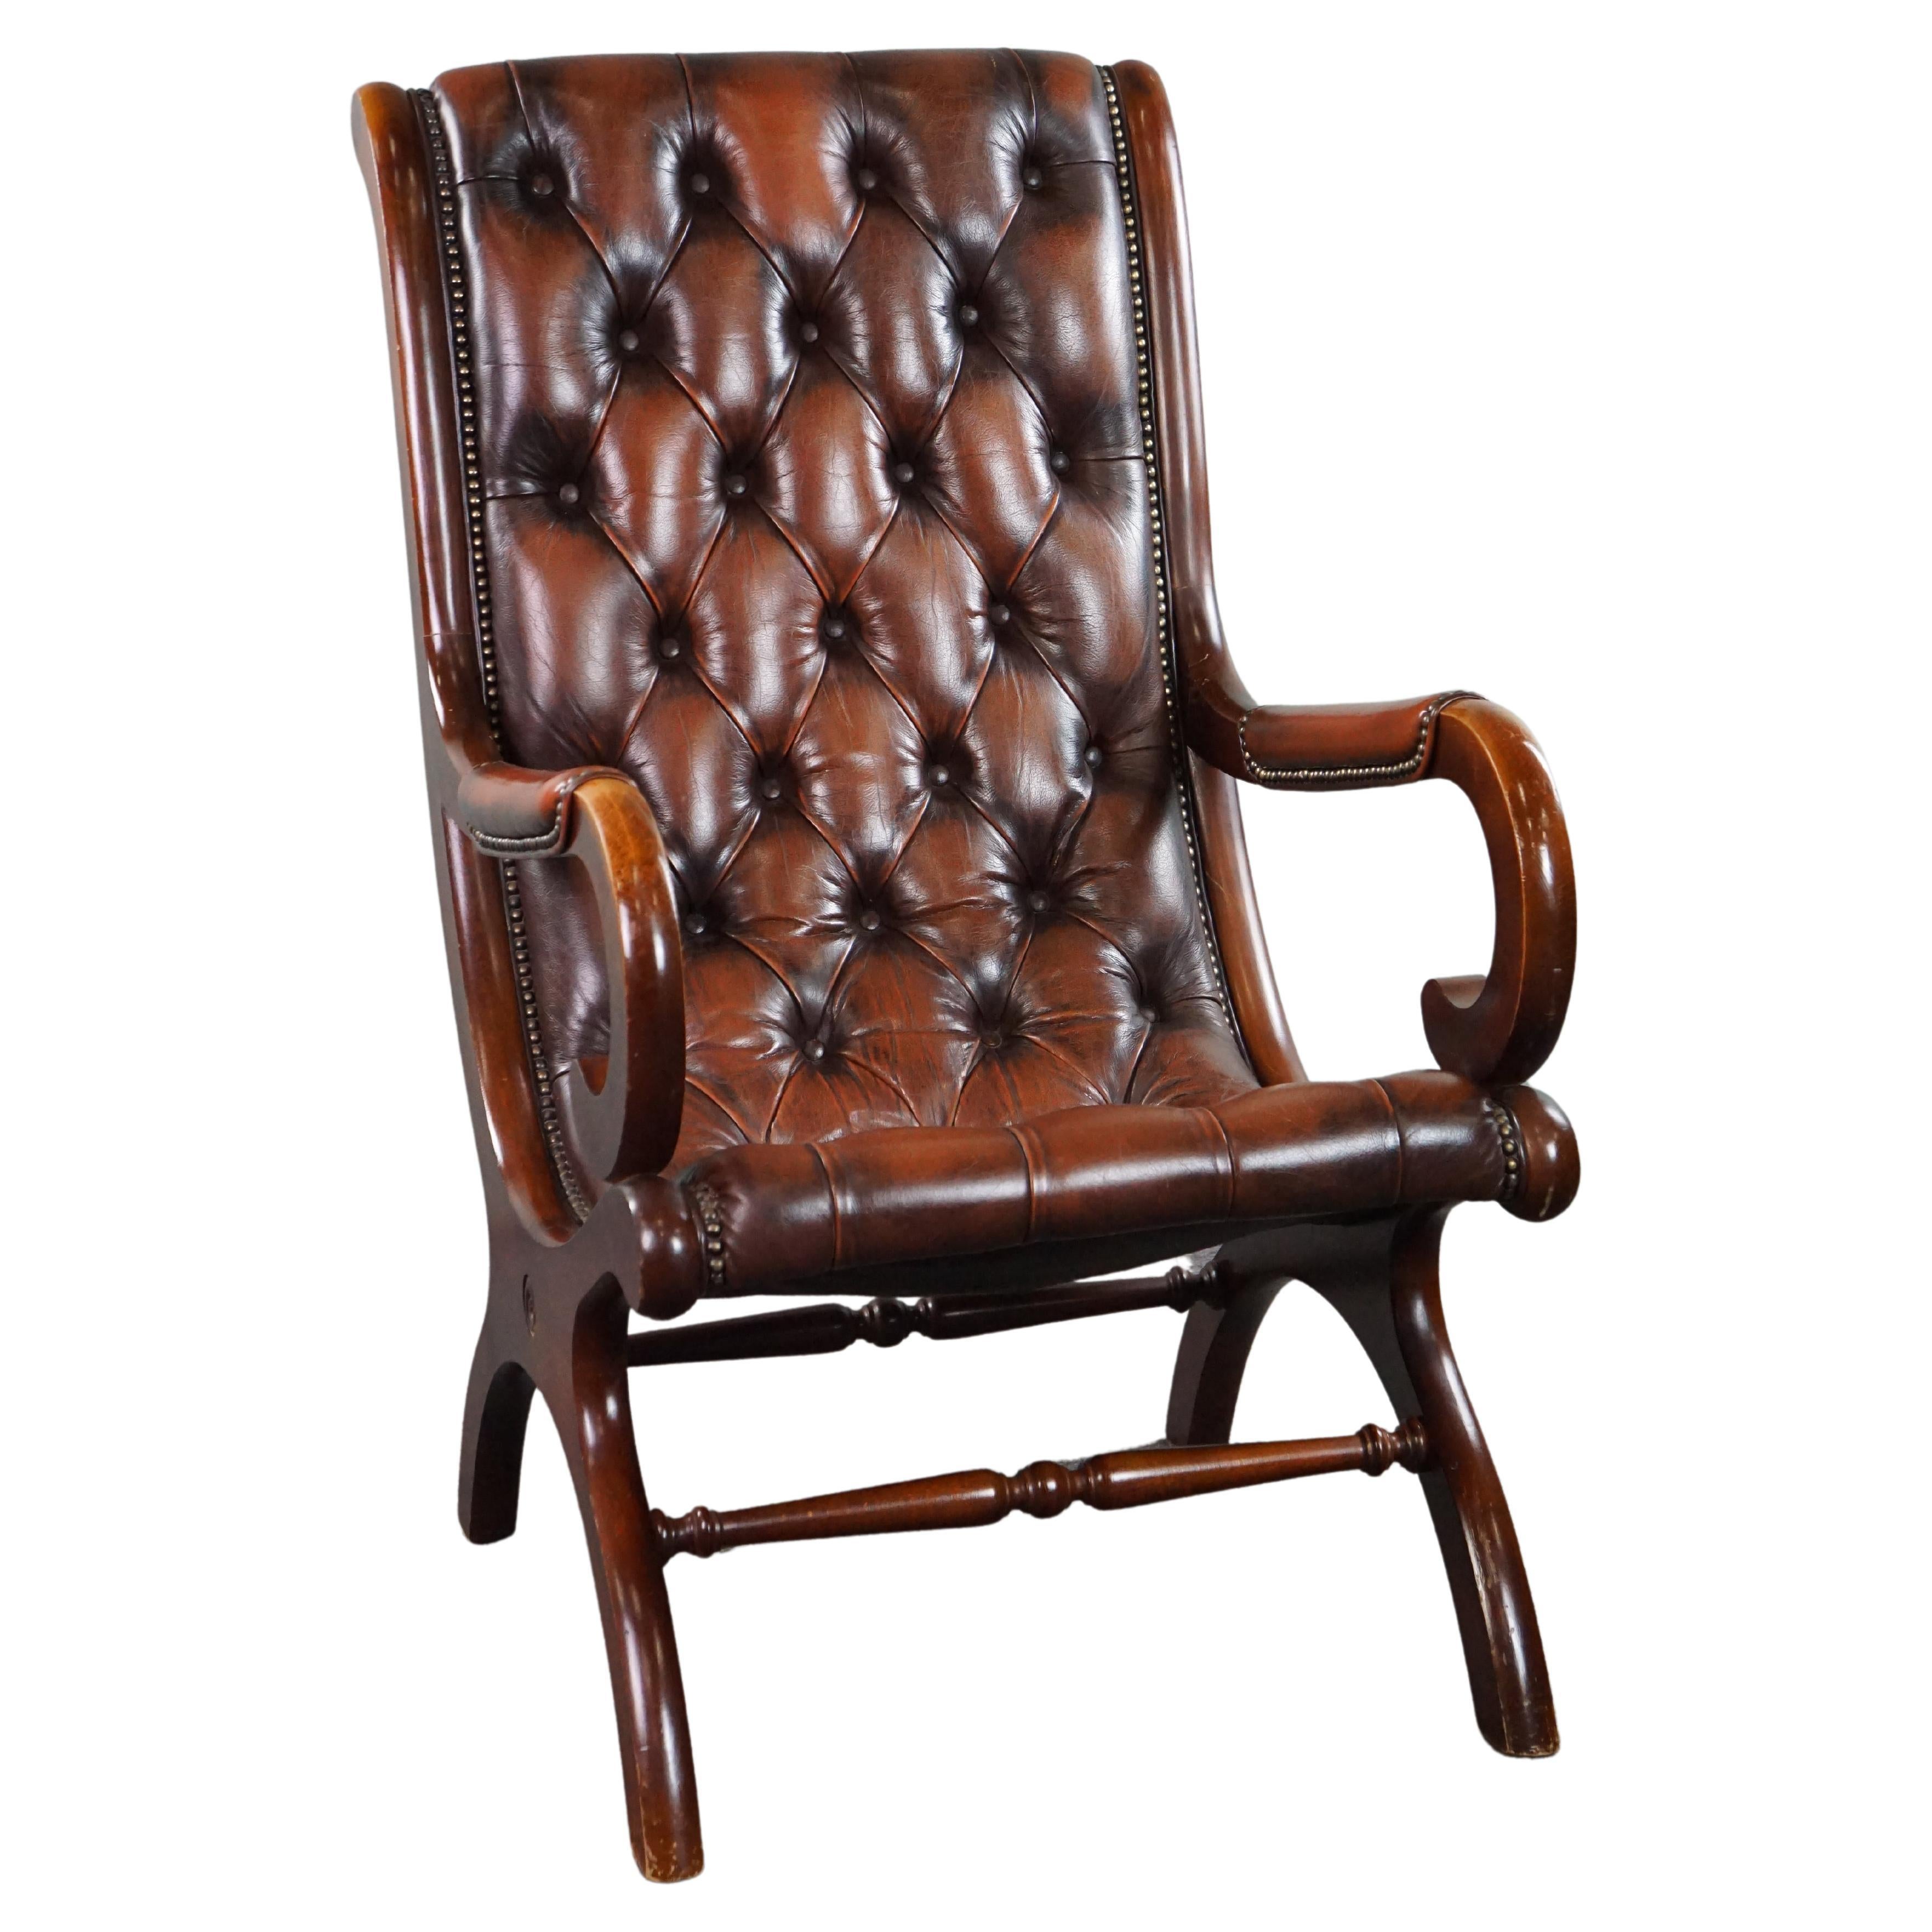  English cowhide chesterfield armchair